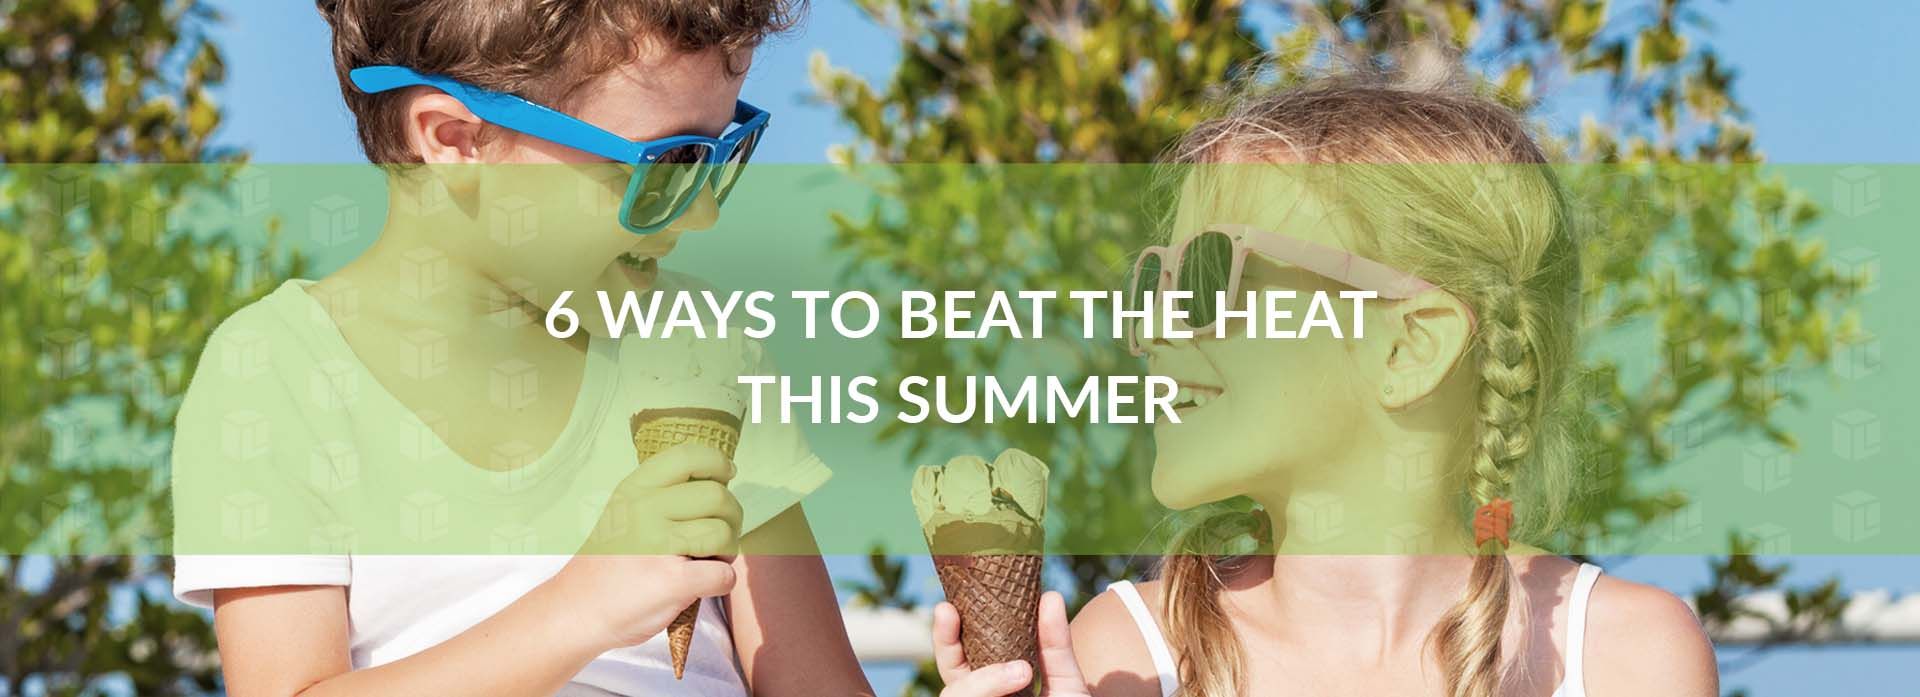 6 Ways To Beat The Heat This Summer 6 Ways To Beat The Heat This Summer 6 Ways To Beat The Heat This Summer